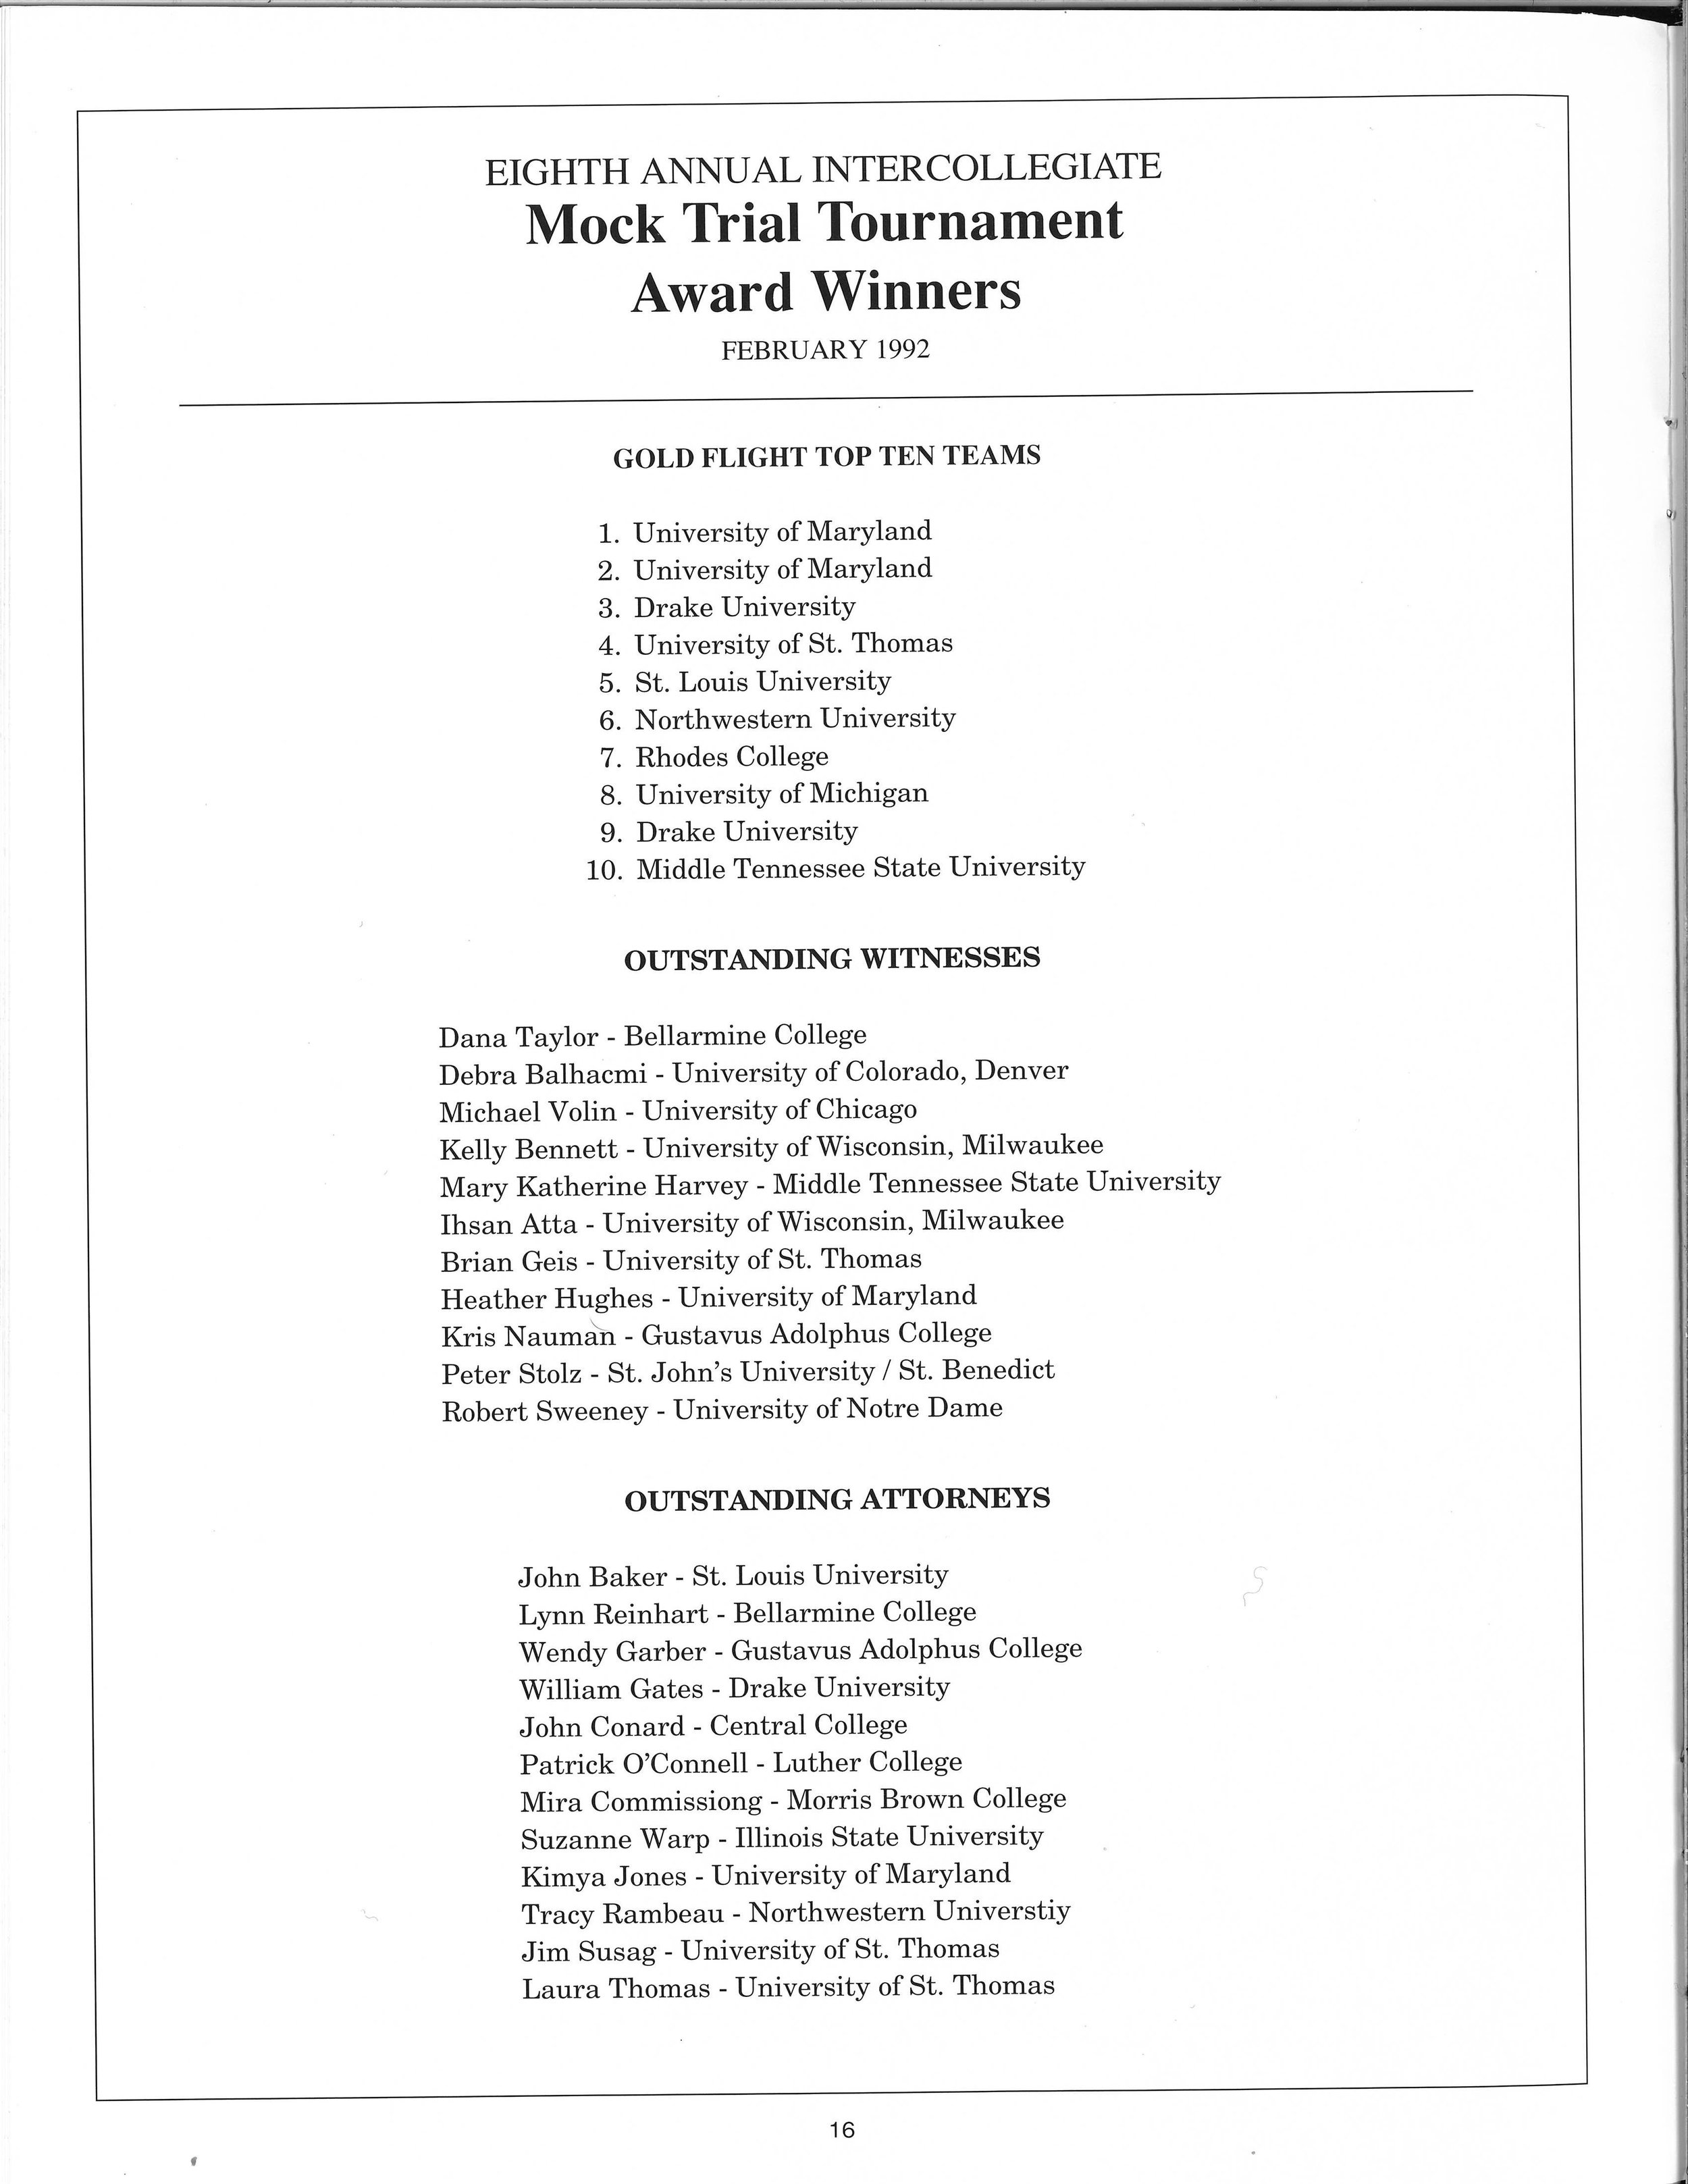 1993 AMTA Program 1992 Award Winners.jpg